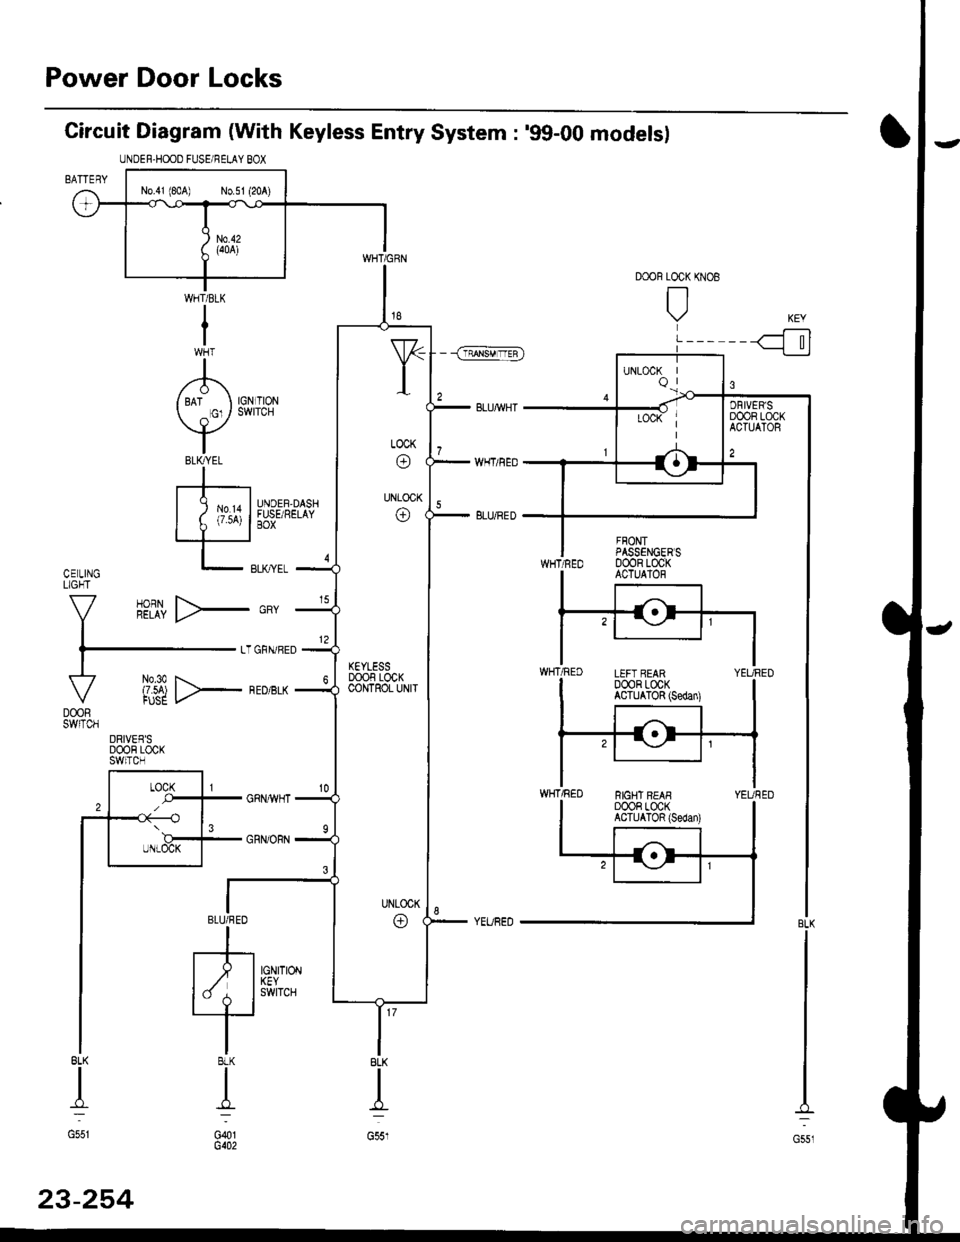 HONDA CIVIC 1998 6.G Workshop Manual Power Door Locks
Circuit Diagram (With Keyless Entry System : 99-00 models)
BL(
I
G551
UNDEF.HOOO FUSE/RELAY BOX
N0.41 1804) N0.51 (20 )
KEYLESSDOOF LOCKCOIJTROL UNIT
DRIVEFSDOOF LOCKSWITCH
23-254 